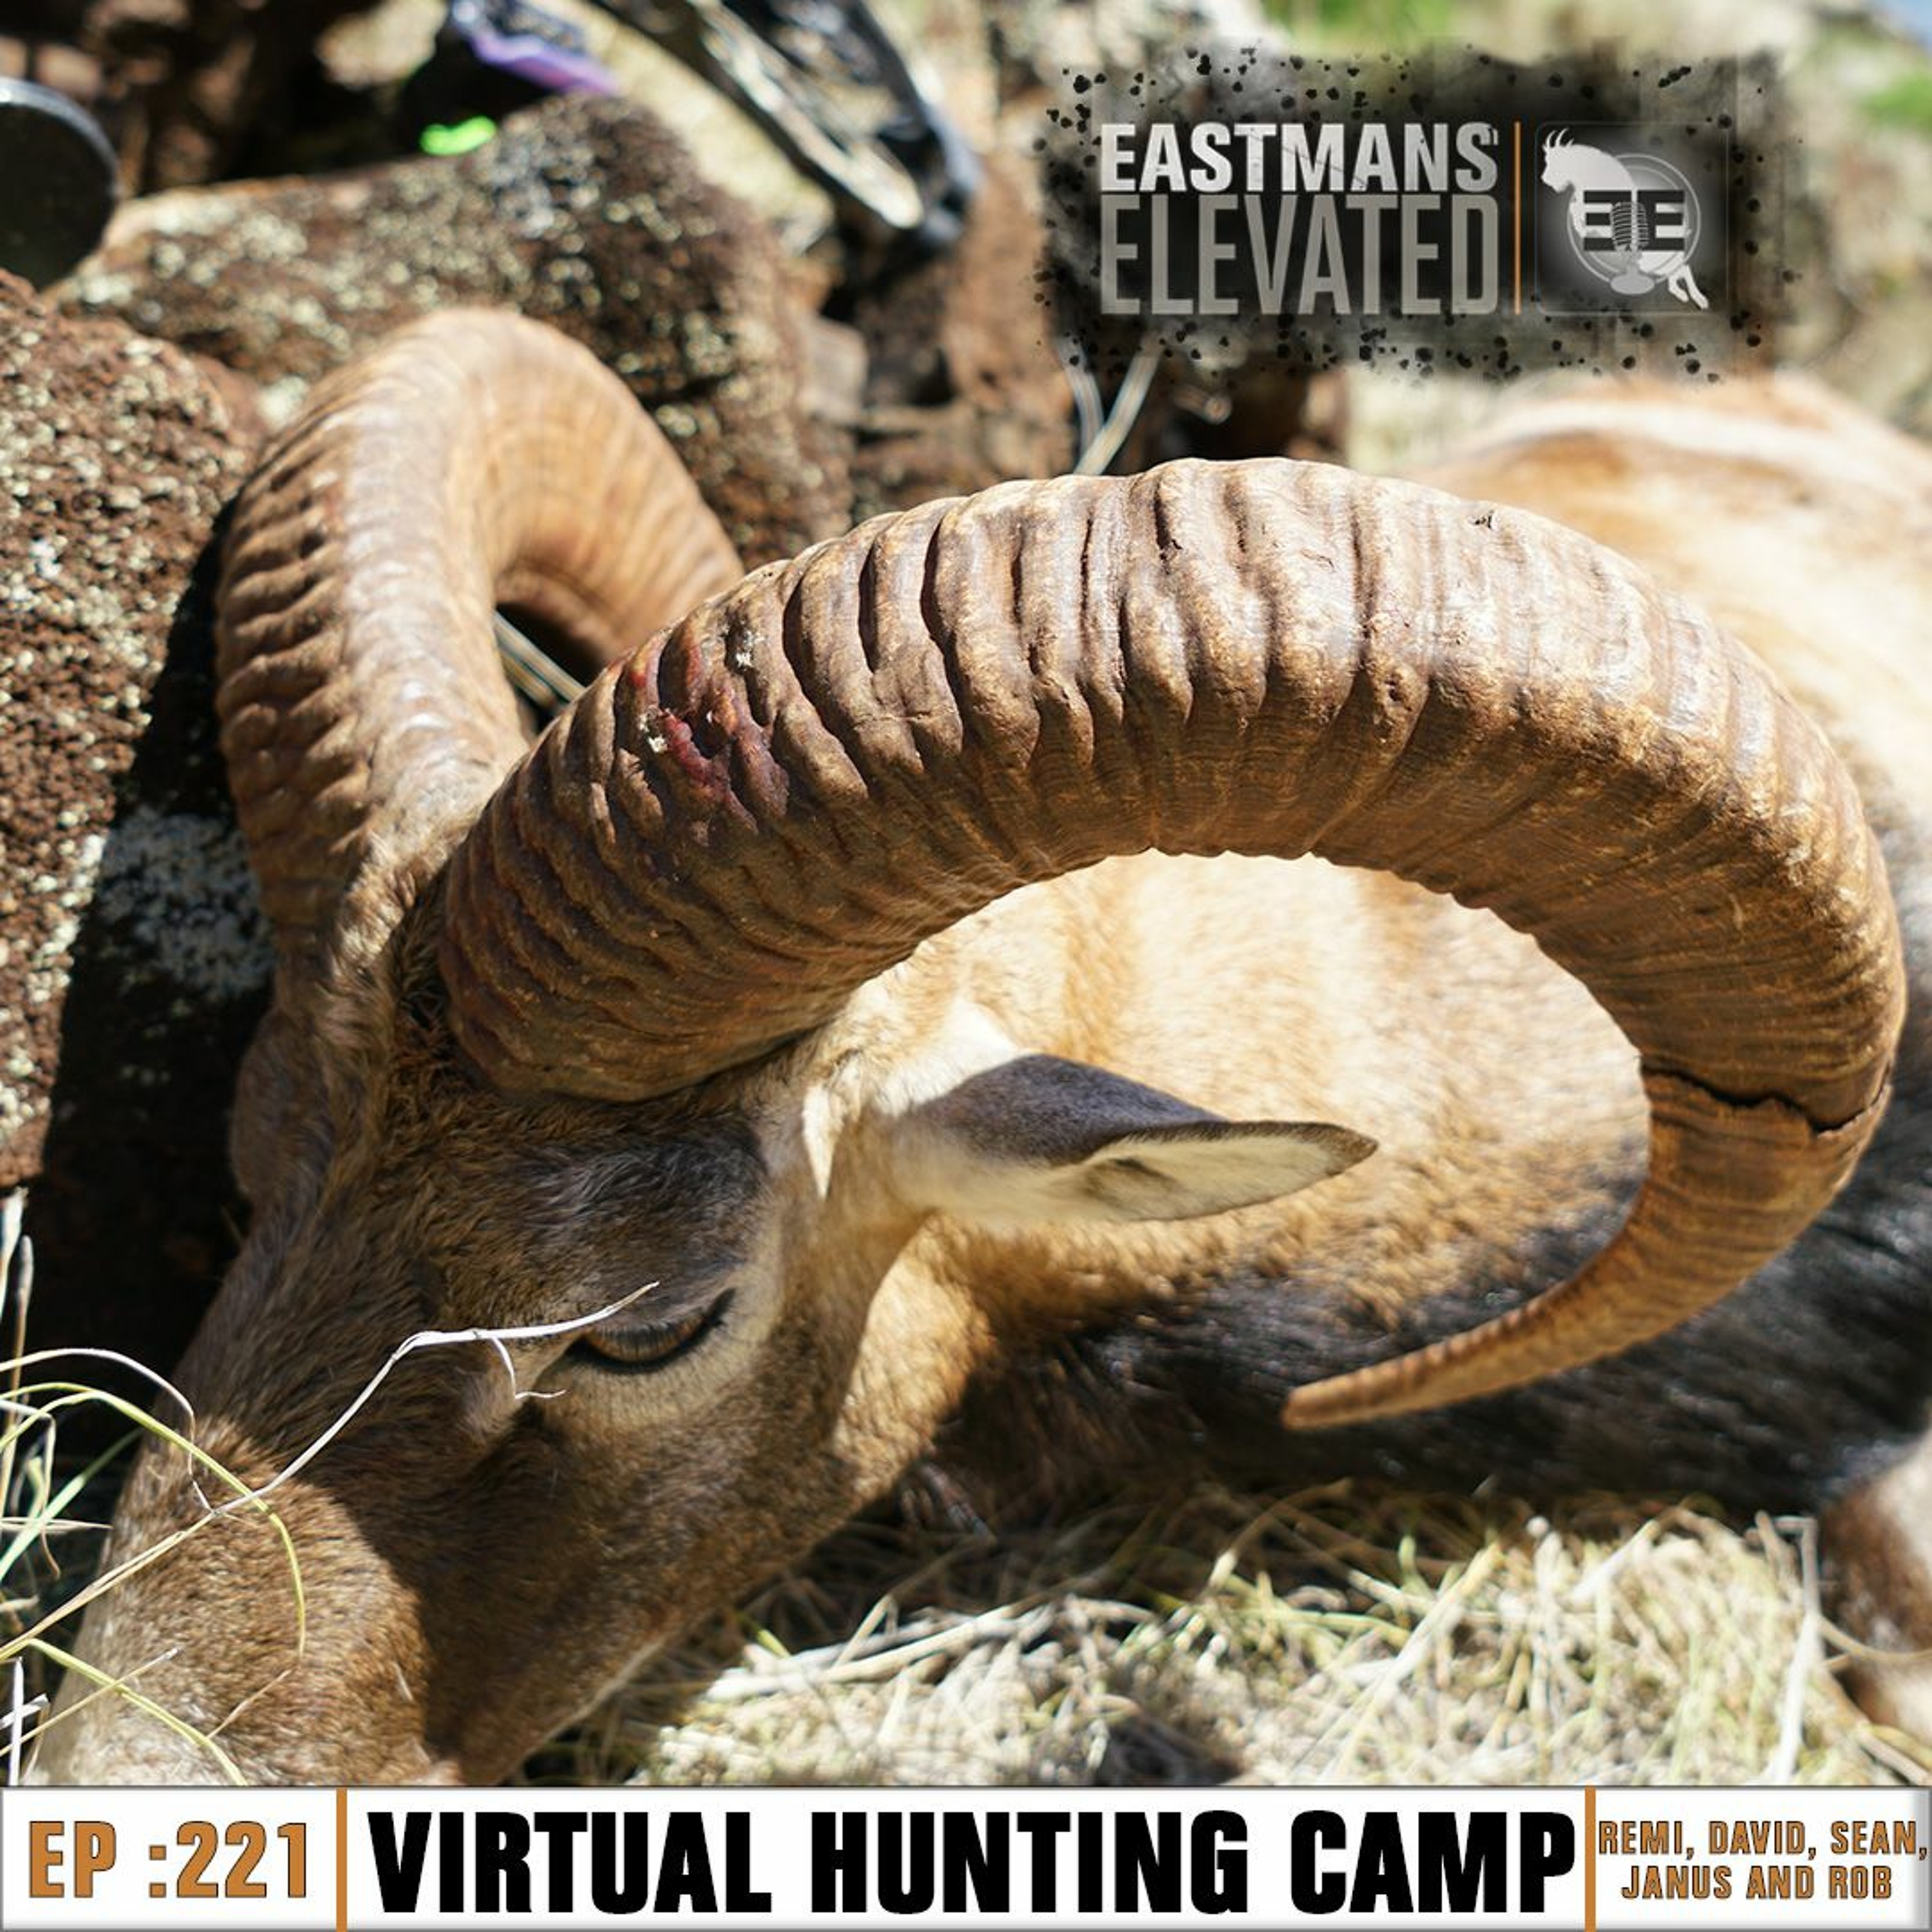 Episode 221: Virtual Hunting Camp with Remi, David, Sean, Janus and Rob